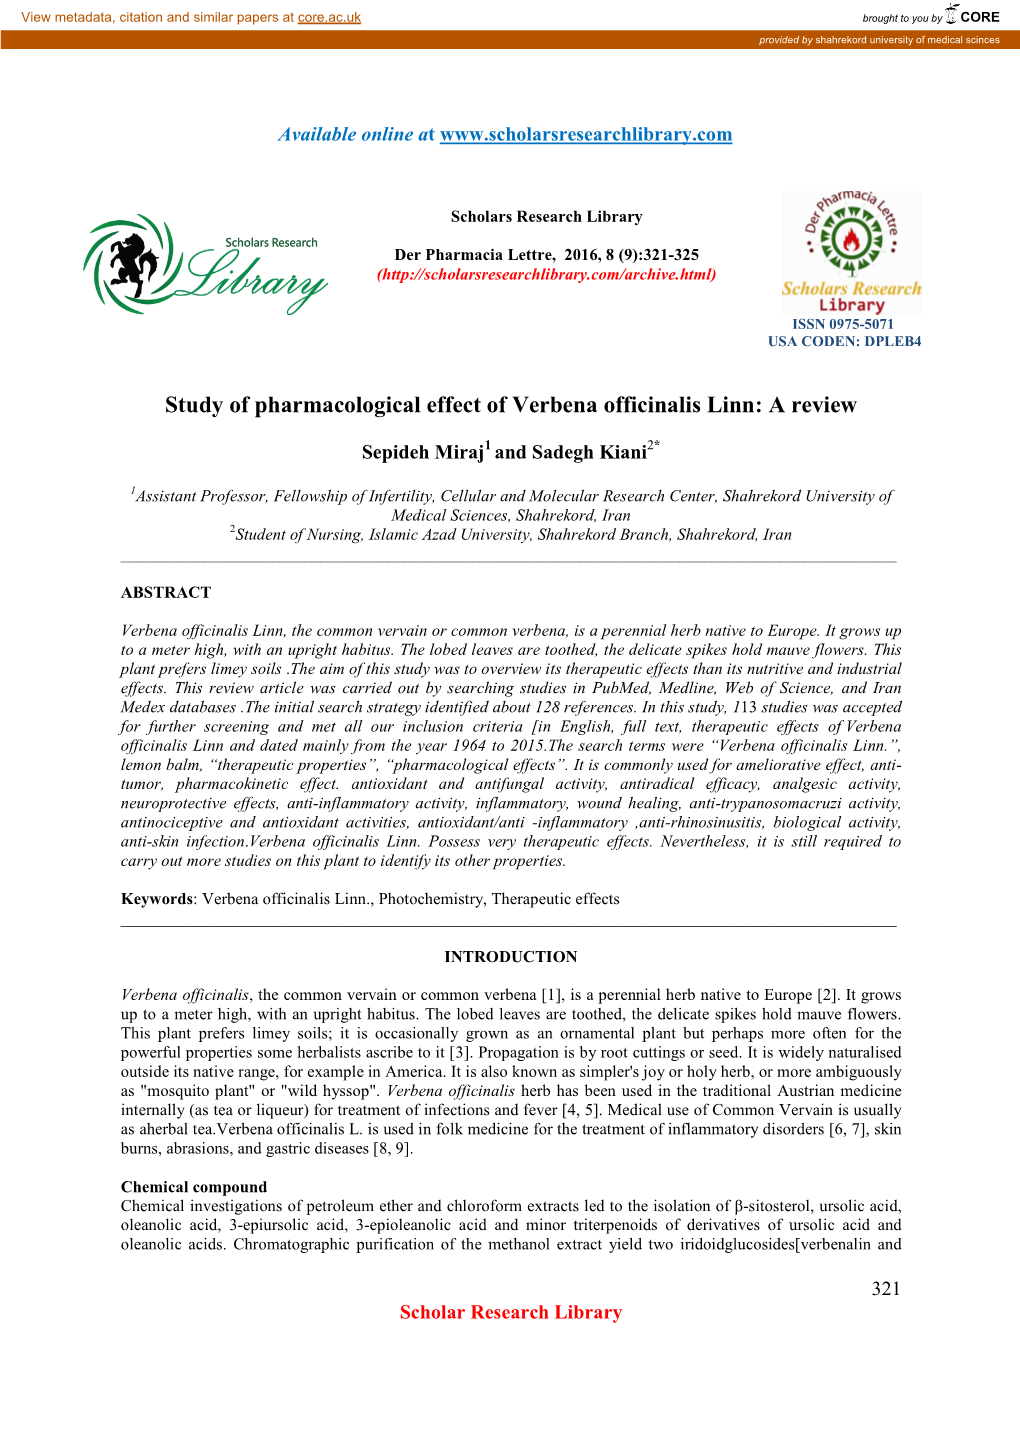 Verbena Officinalis Linn: a Review